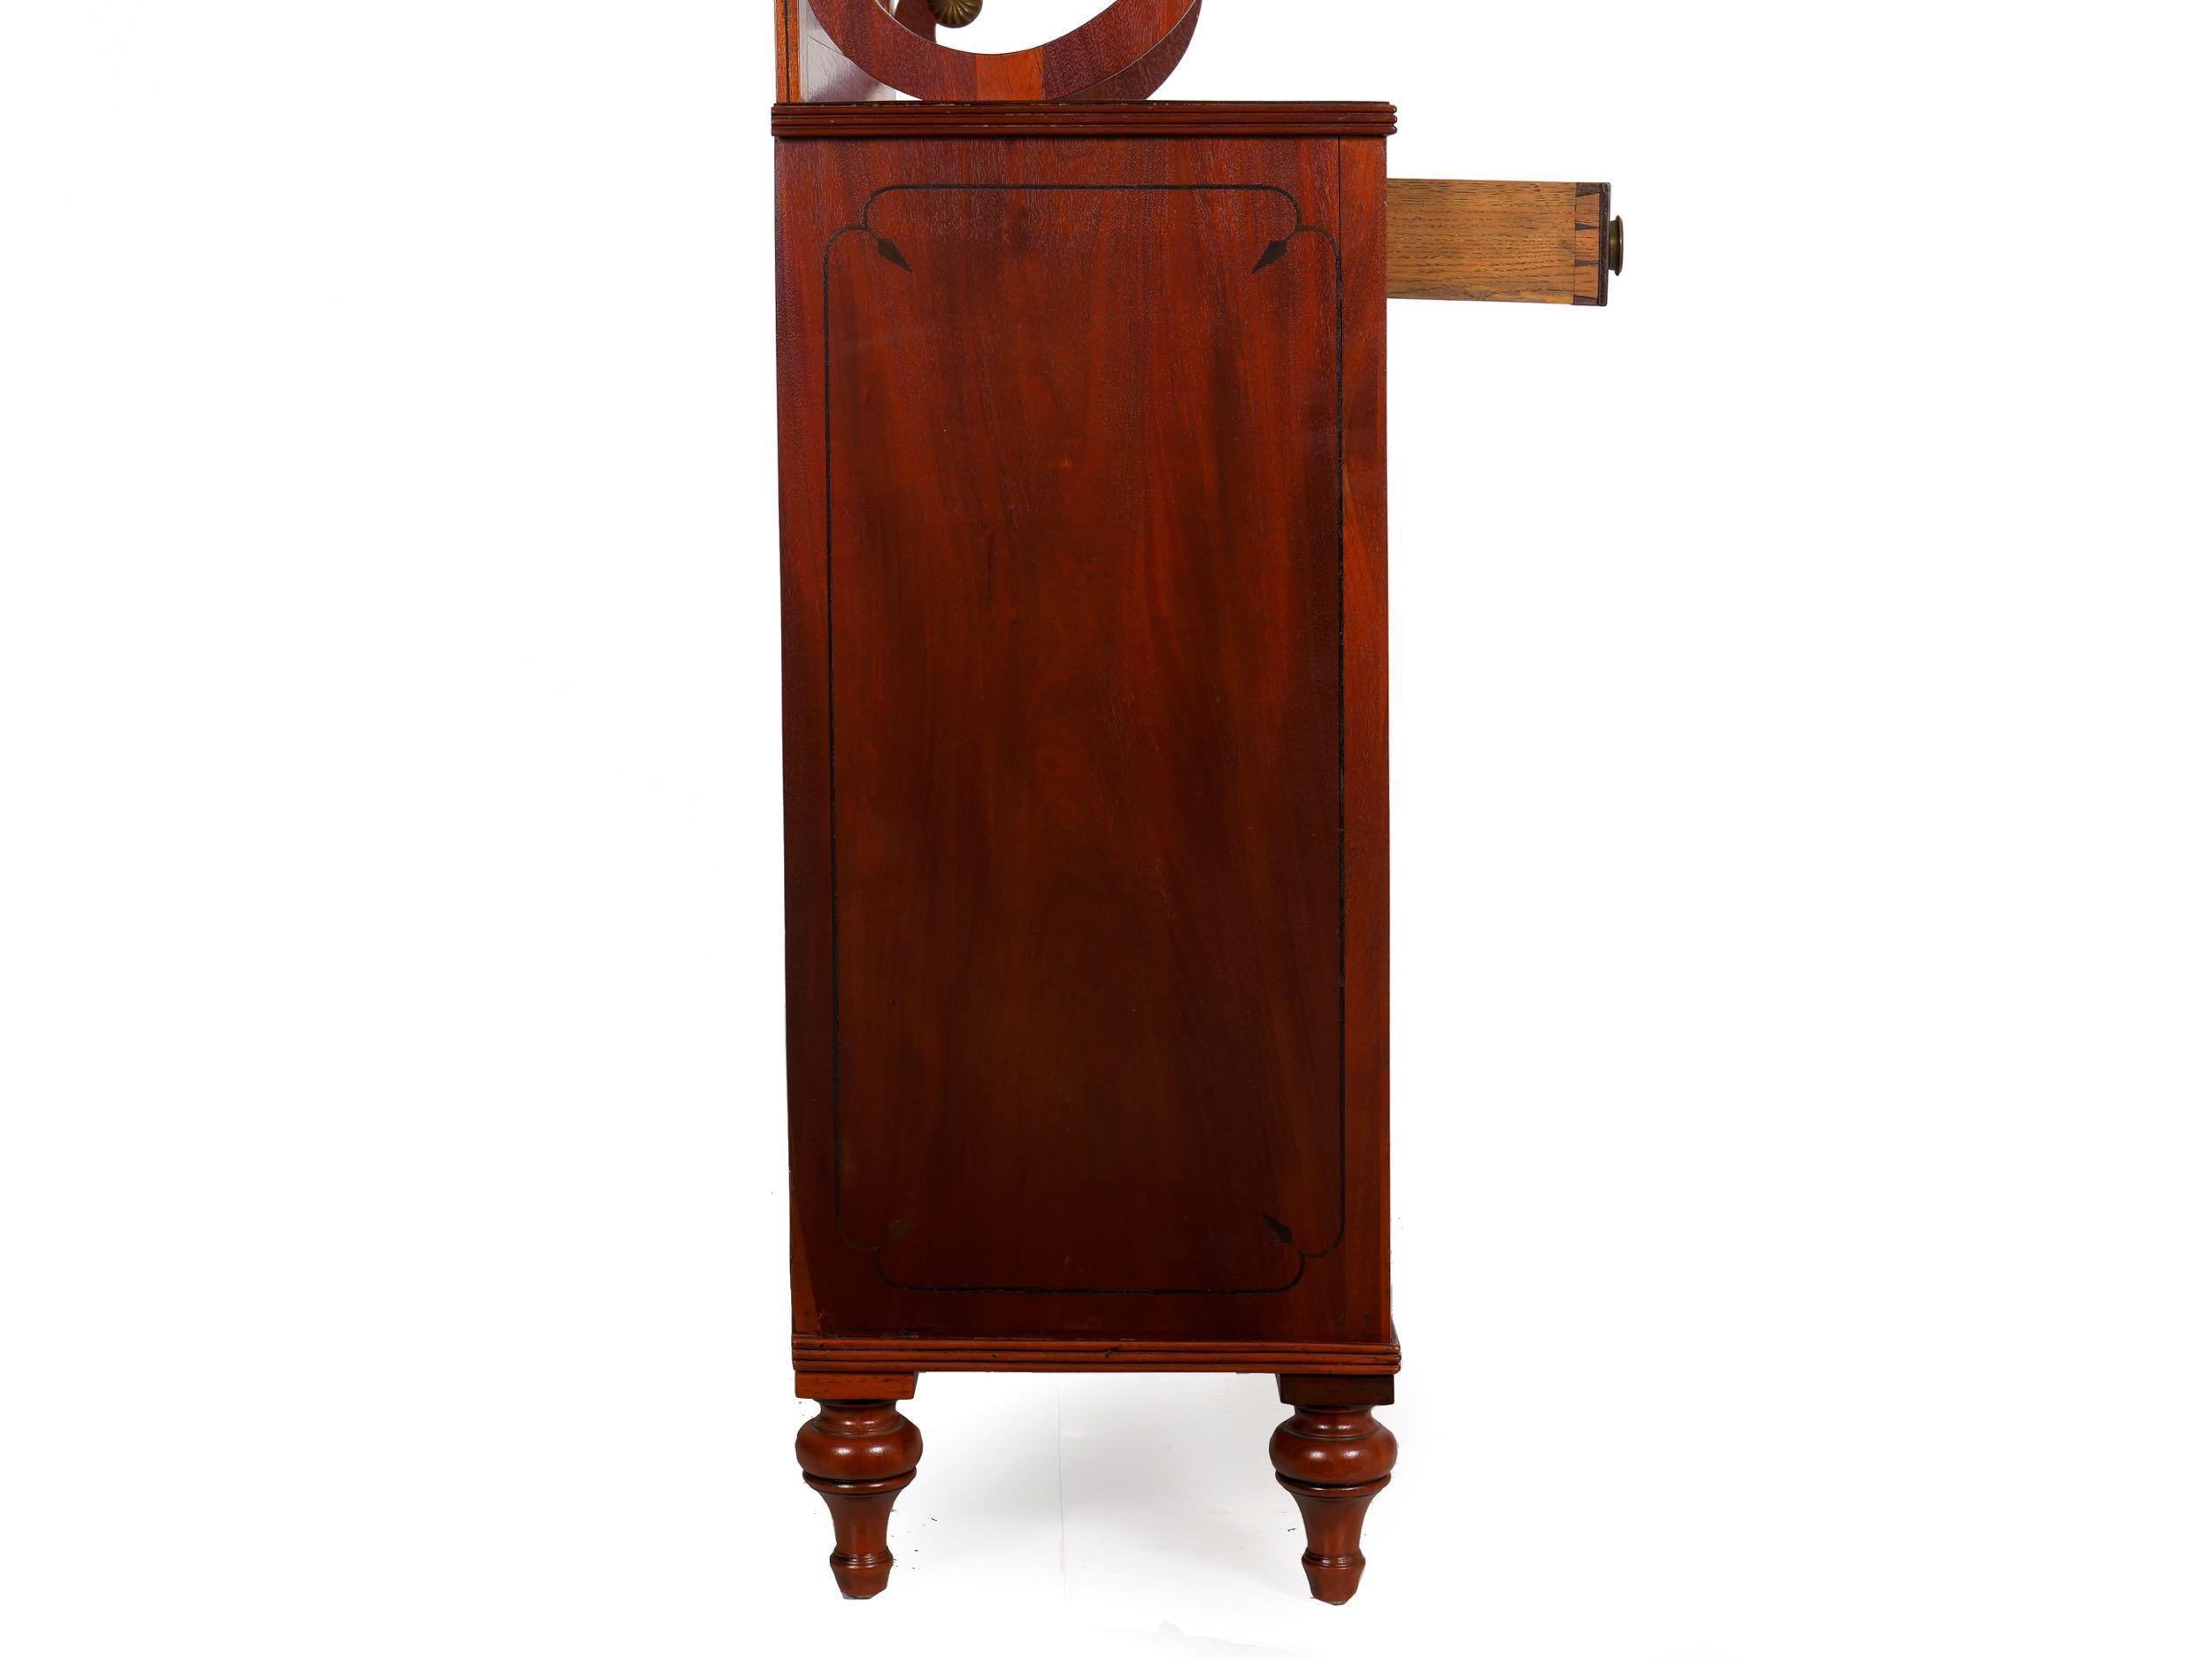 19th Century English Regency Antique Mahogany Chiffonier Cabinet with Bookshelf For Sale 8